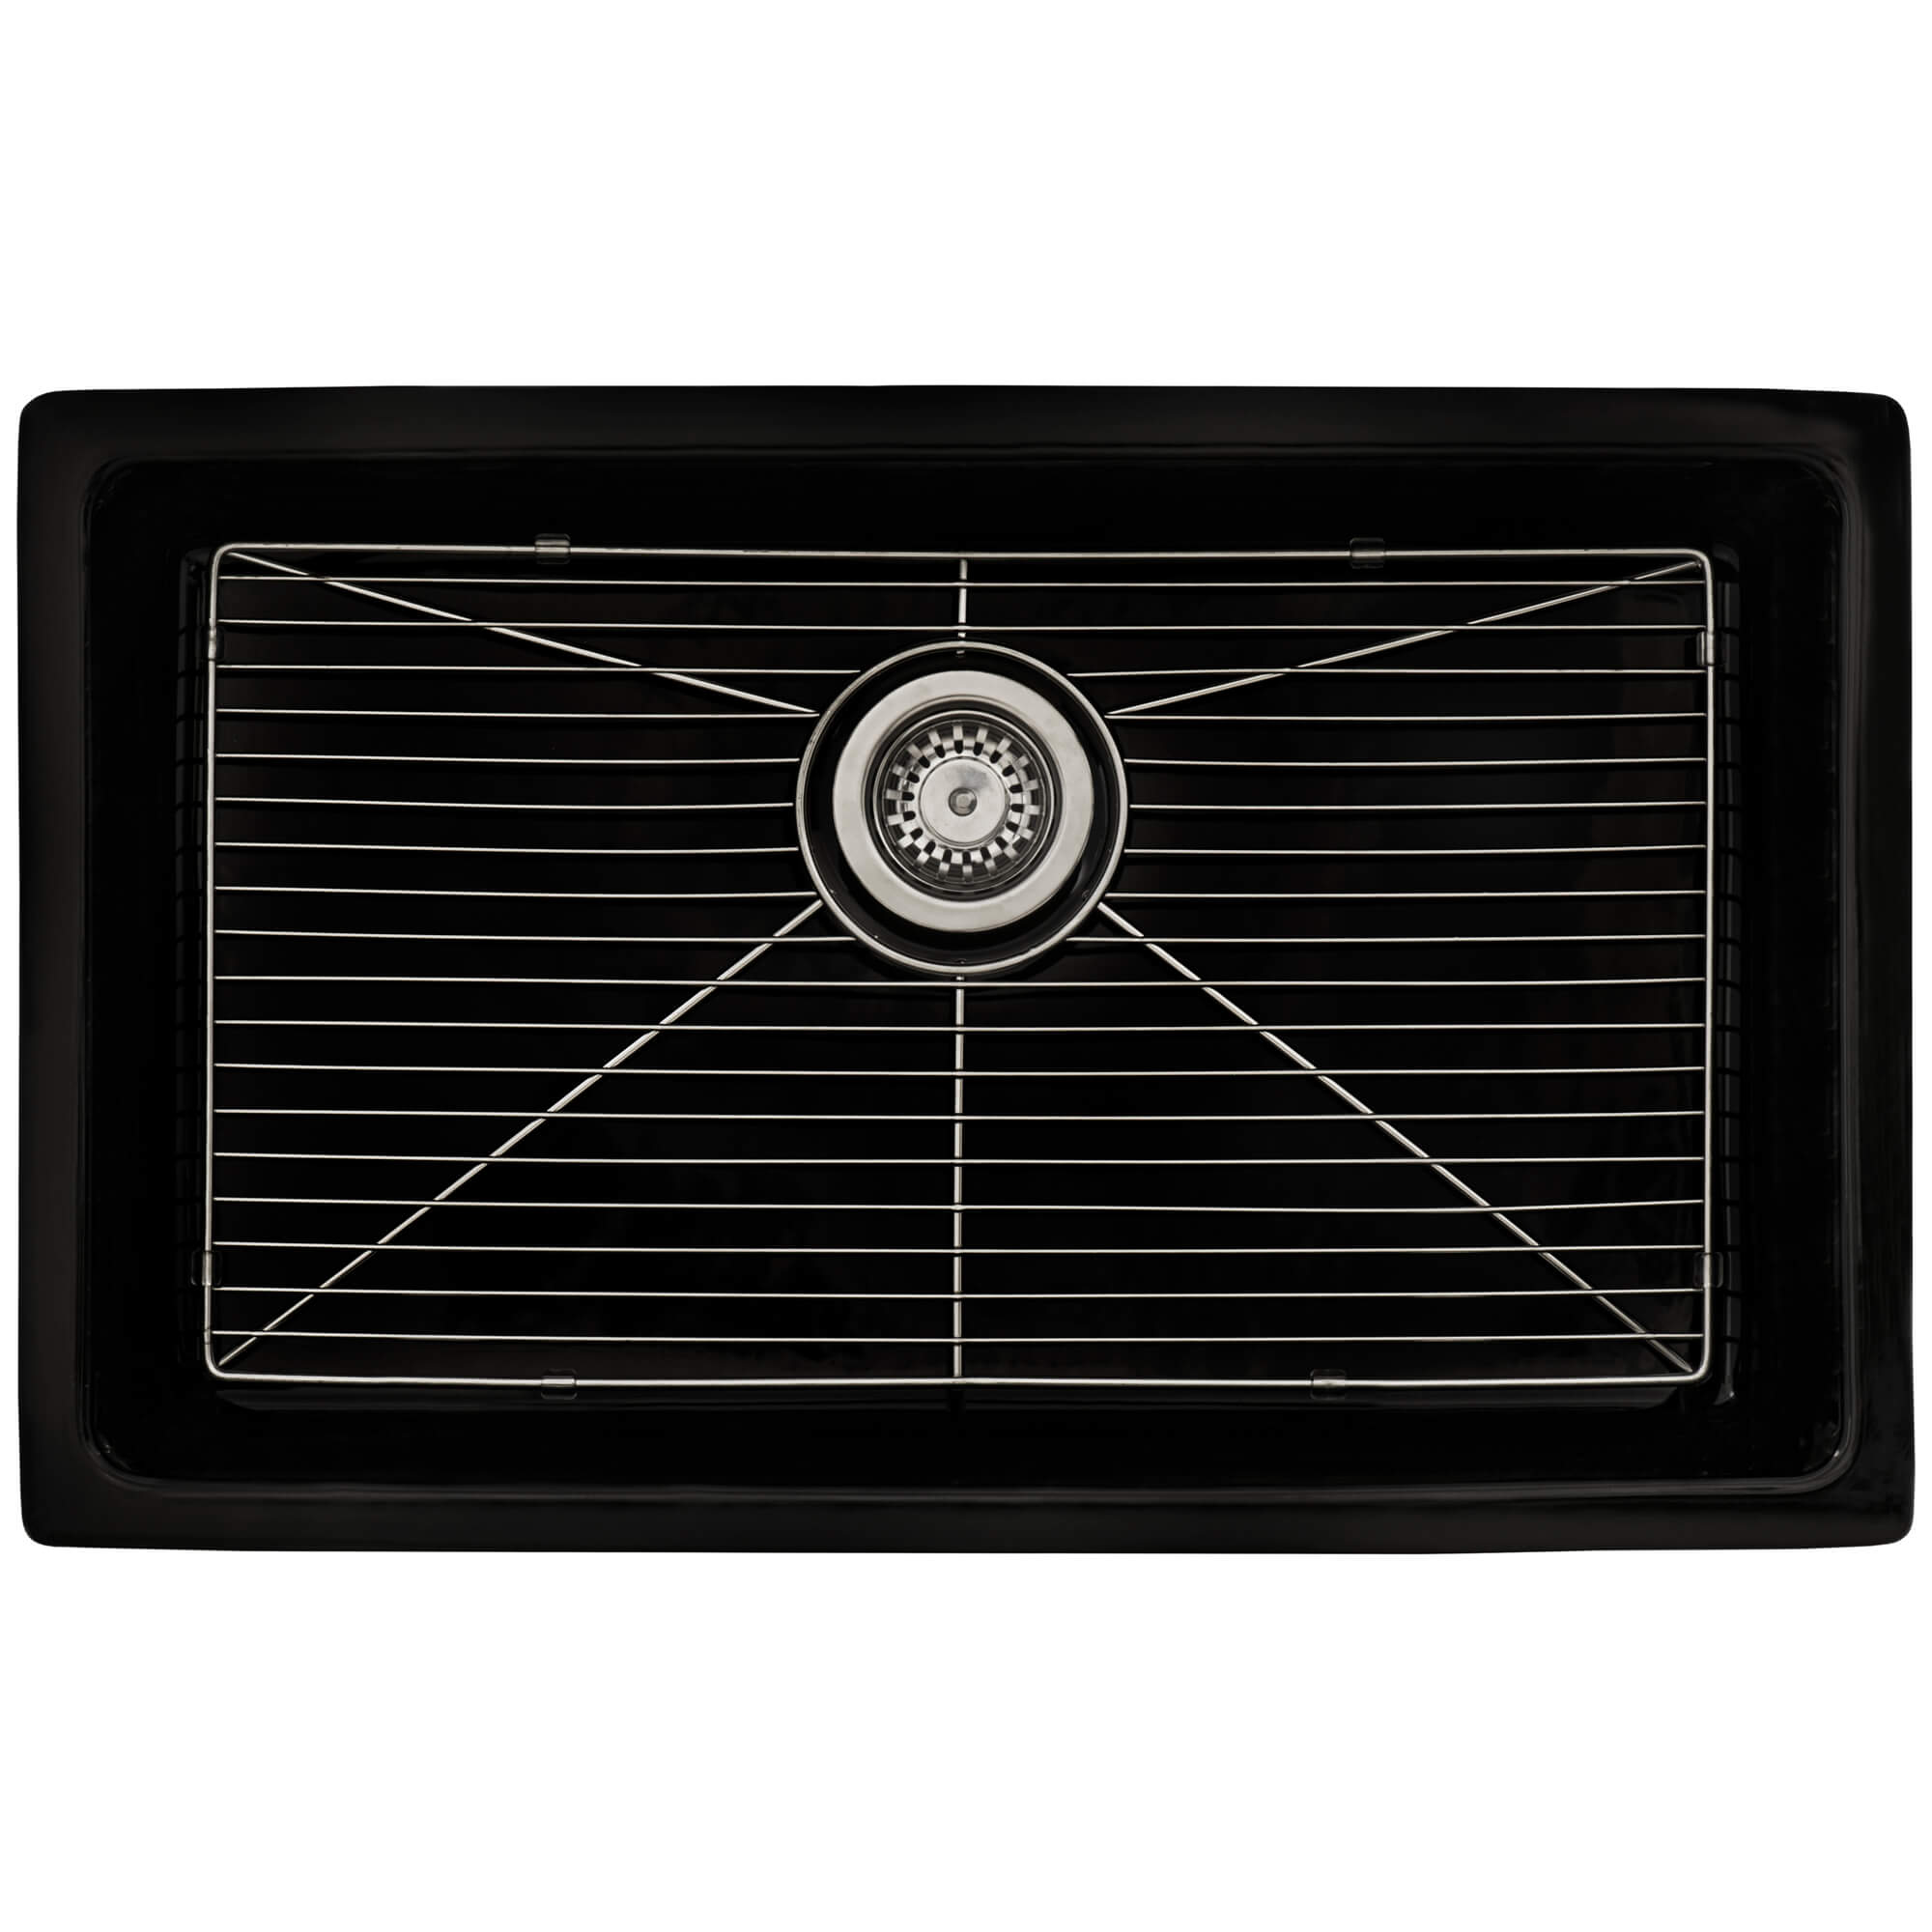 Ruvati - 30-inch Fireclay Undermount / Drop-in Topmount Kitchen Sink Single Bowl – Glossy Black – RVL3030BK